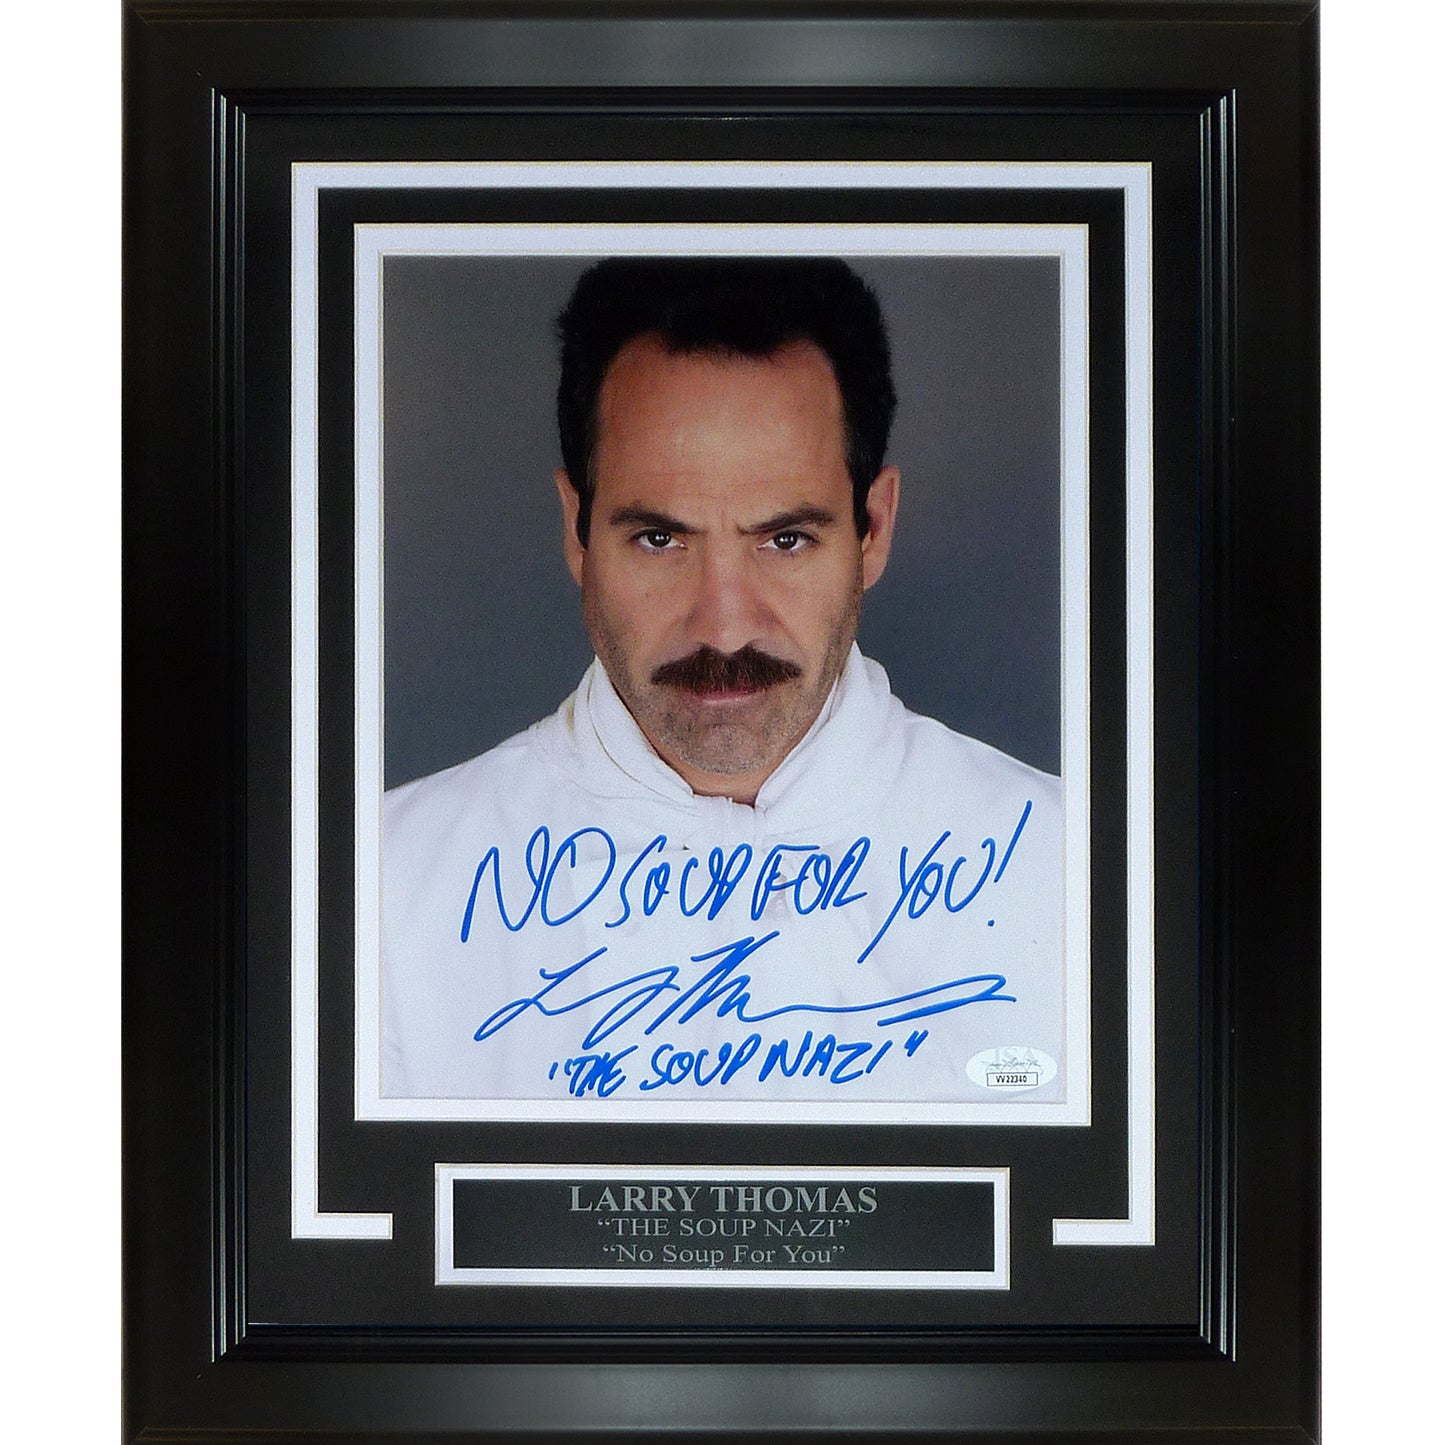 Larry Thomas Autographed Seinfeld “The Soup Nazi” Deluxe Framed 8x10 Photo w/ Inscription – JSA